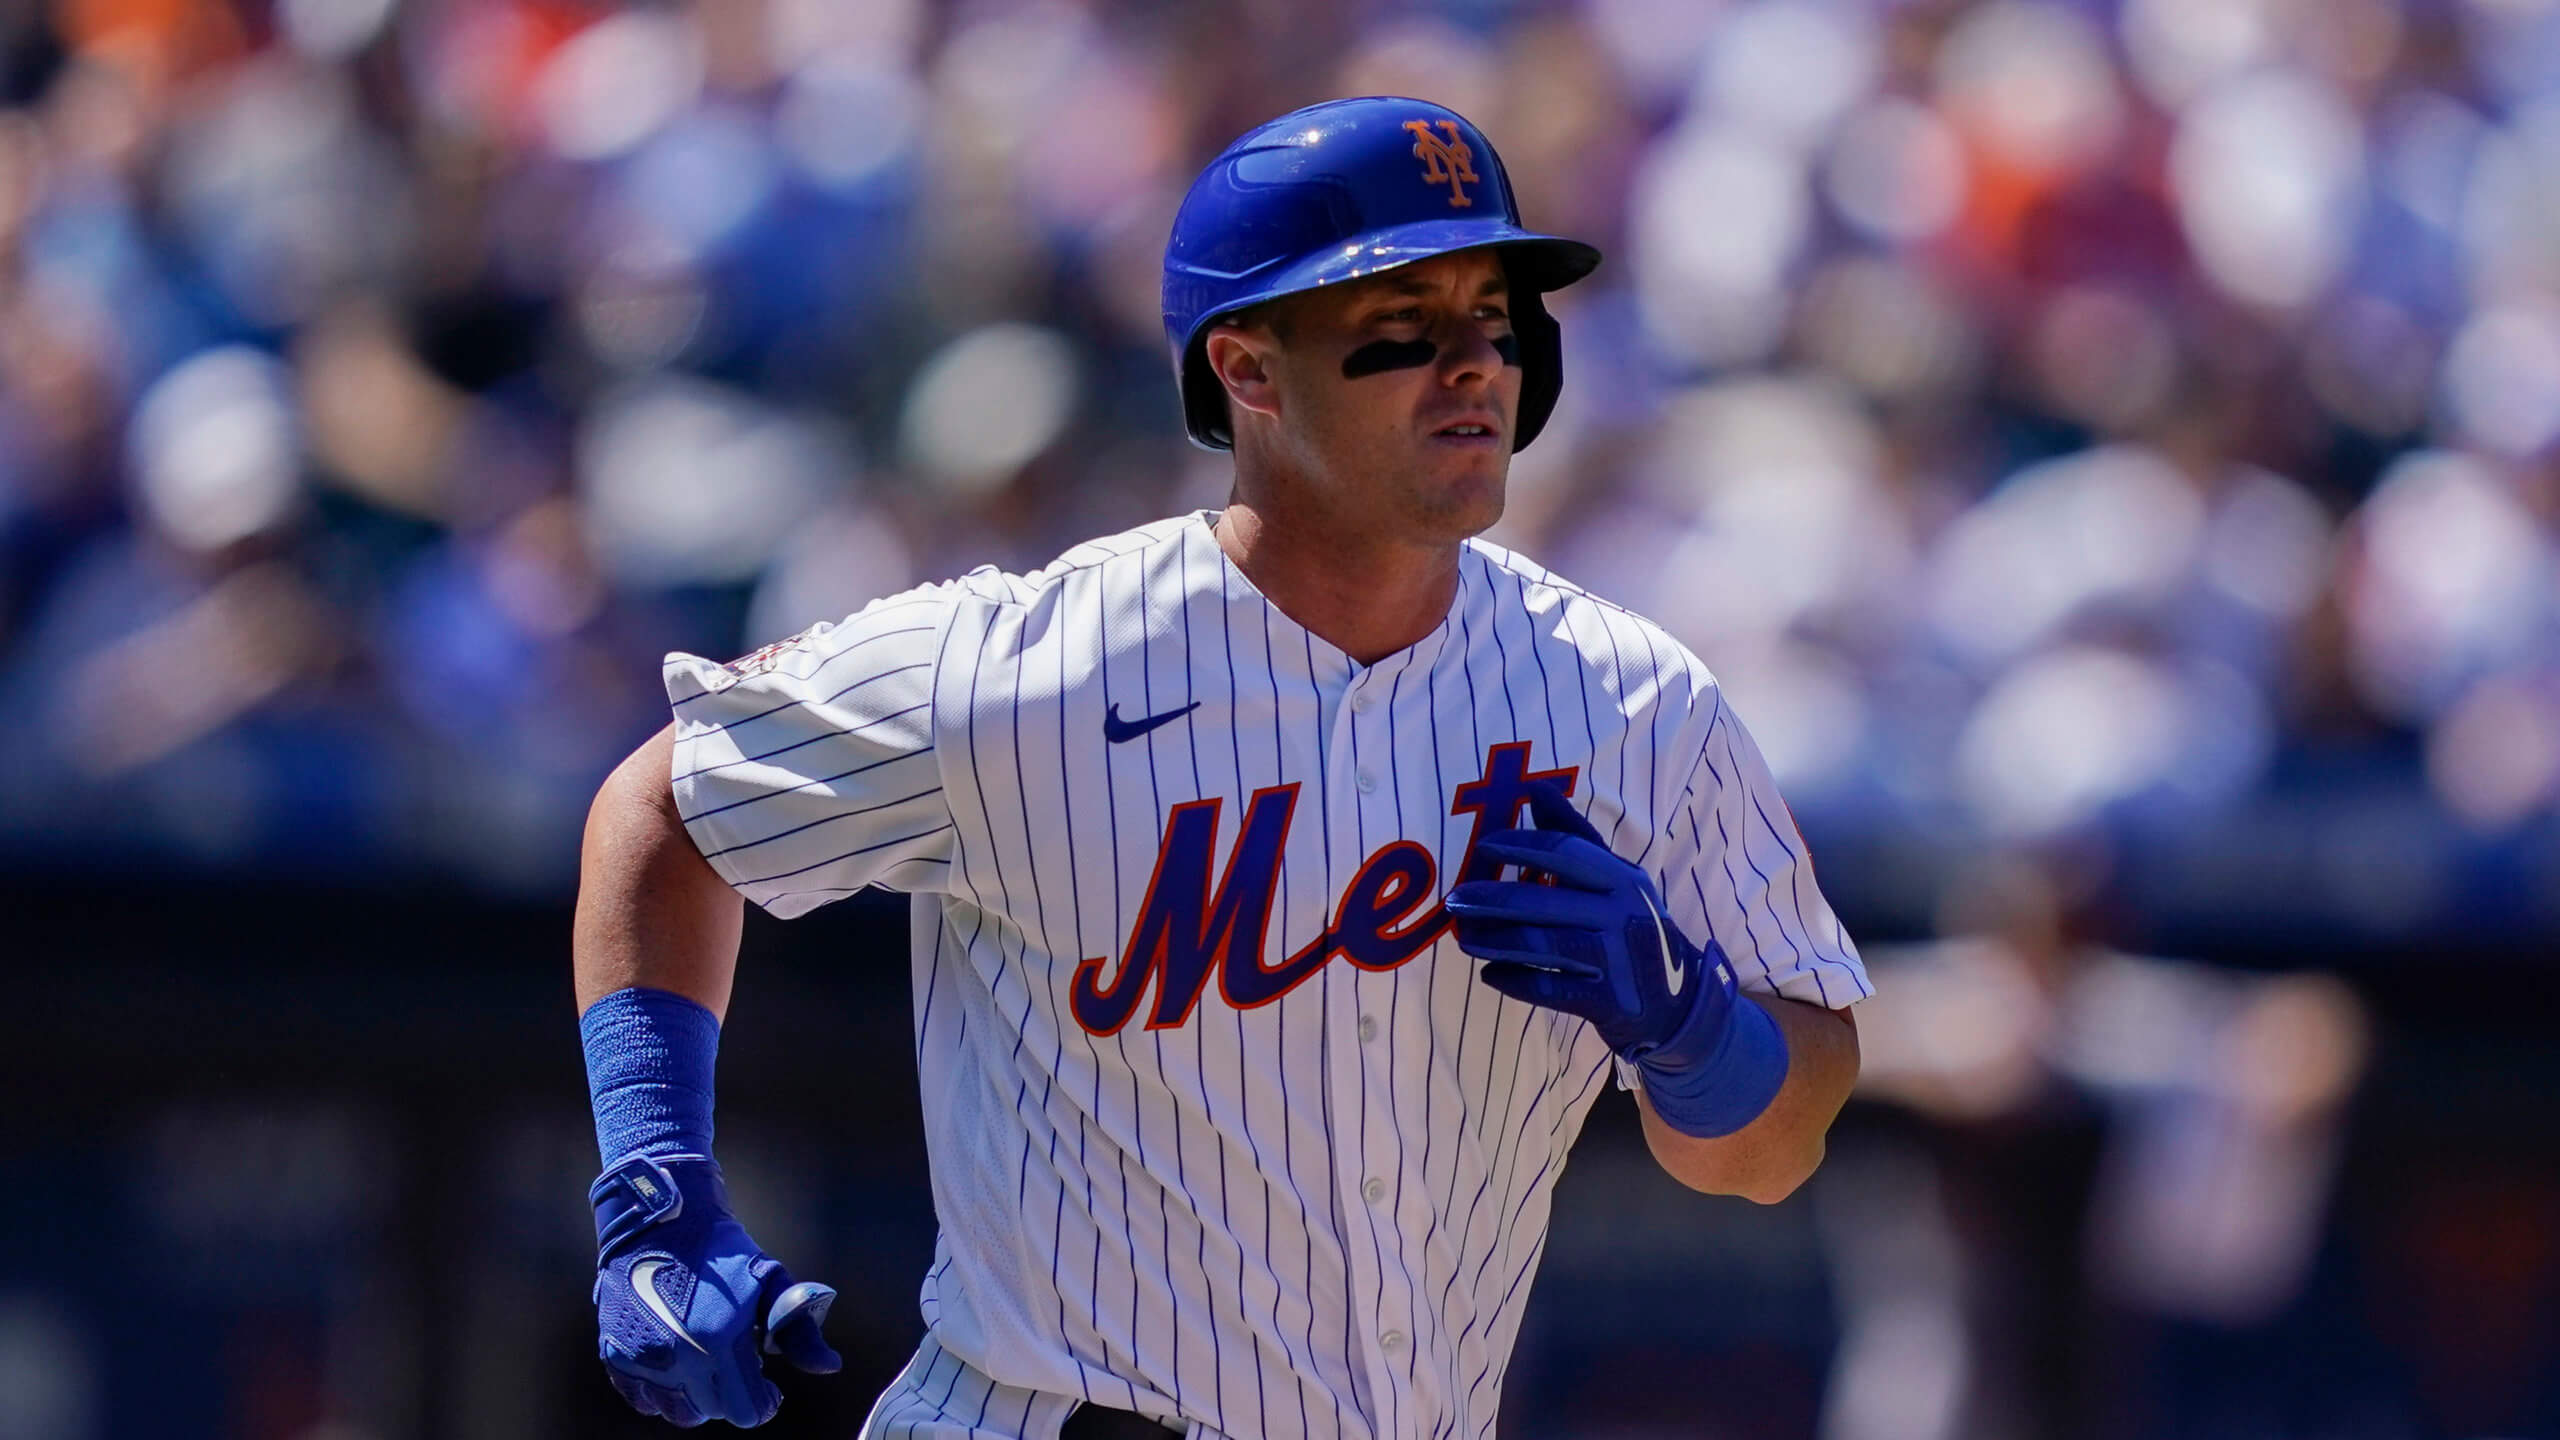 Mets Season Preview: James McCann looks to rebound after